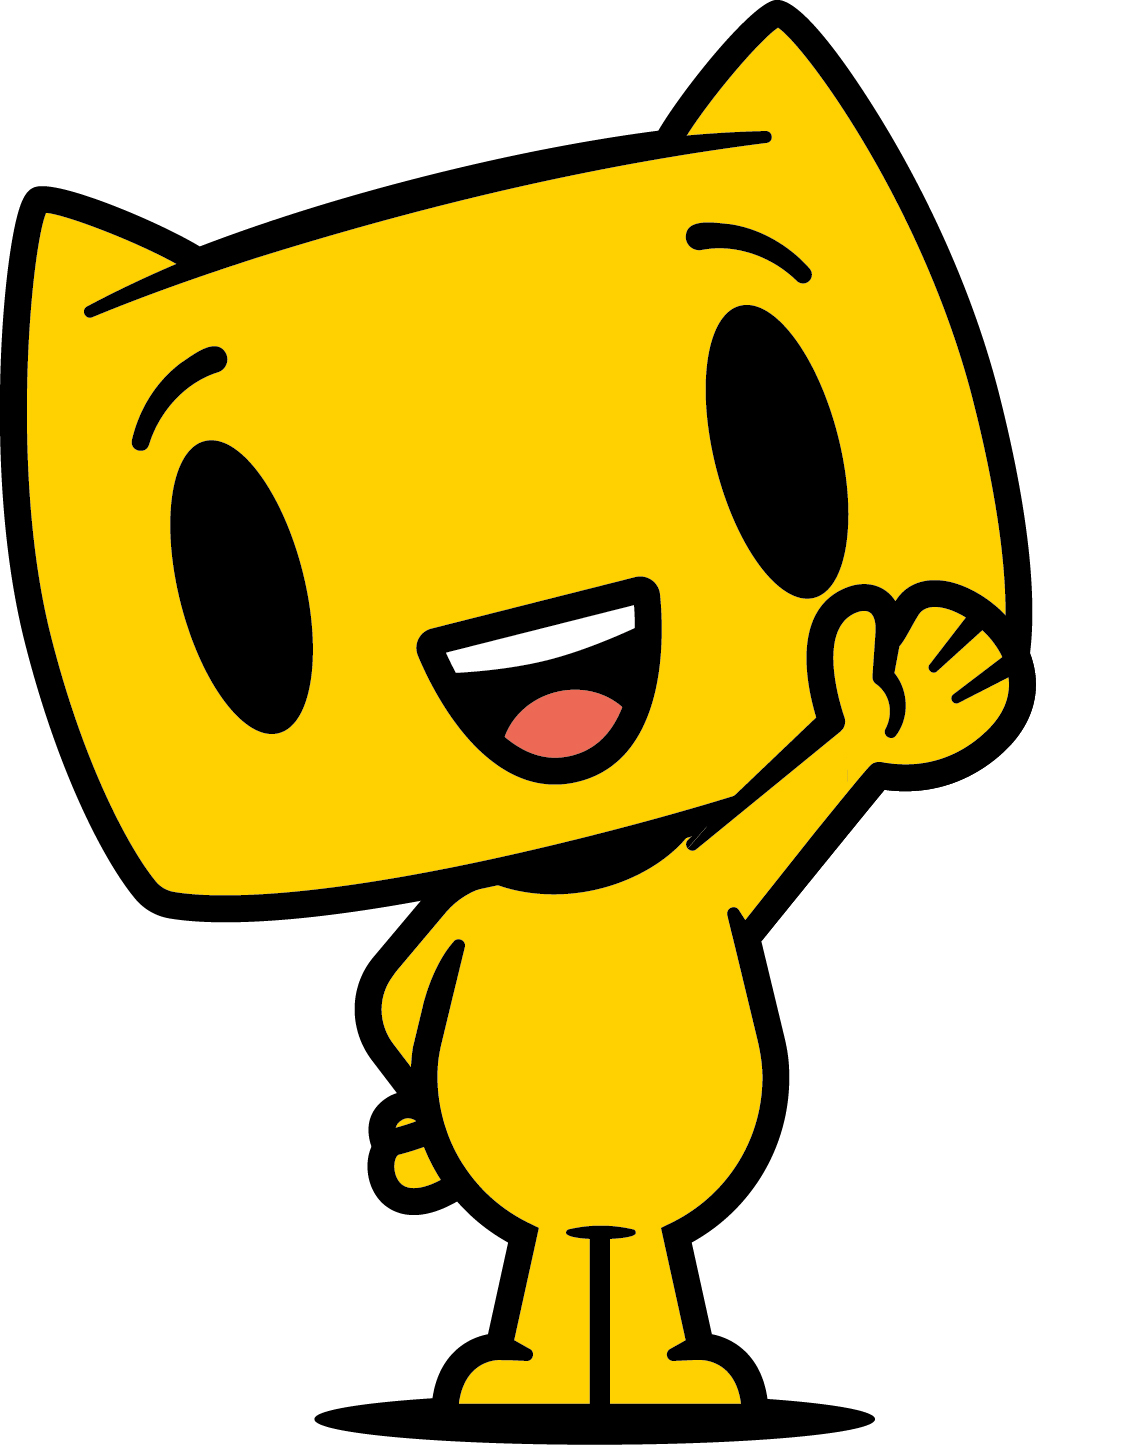 Dizzy, a yellow mascot cartoon character